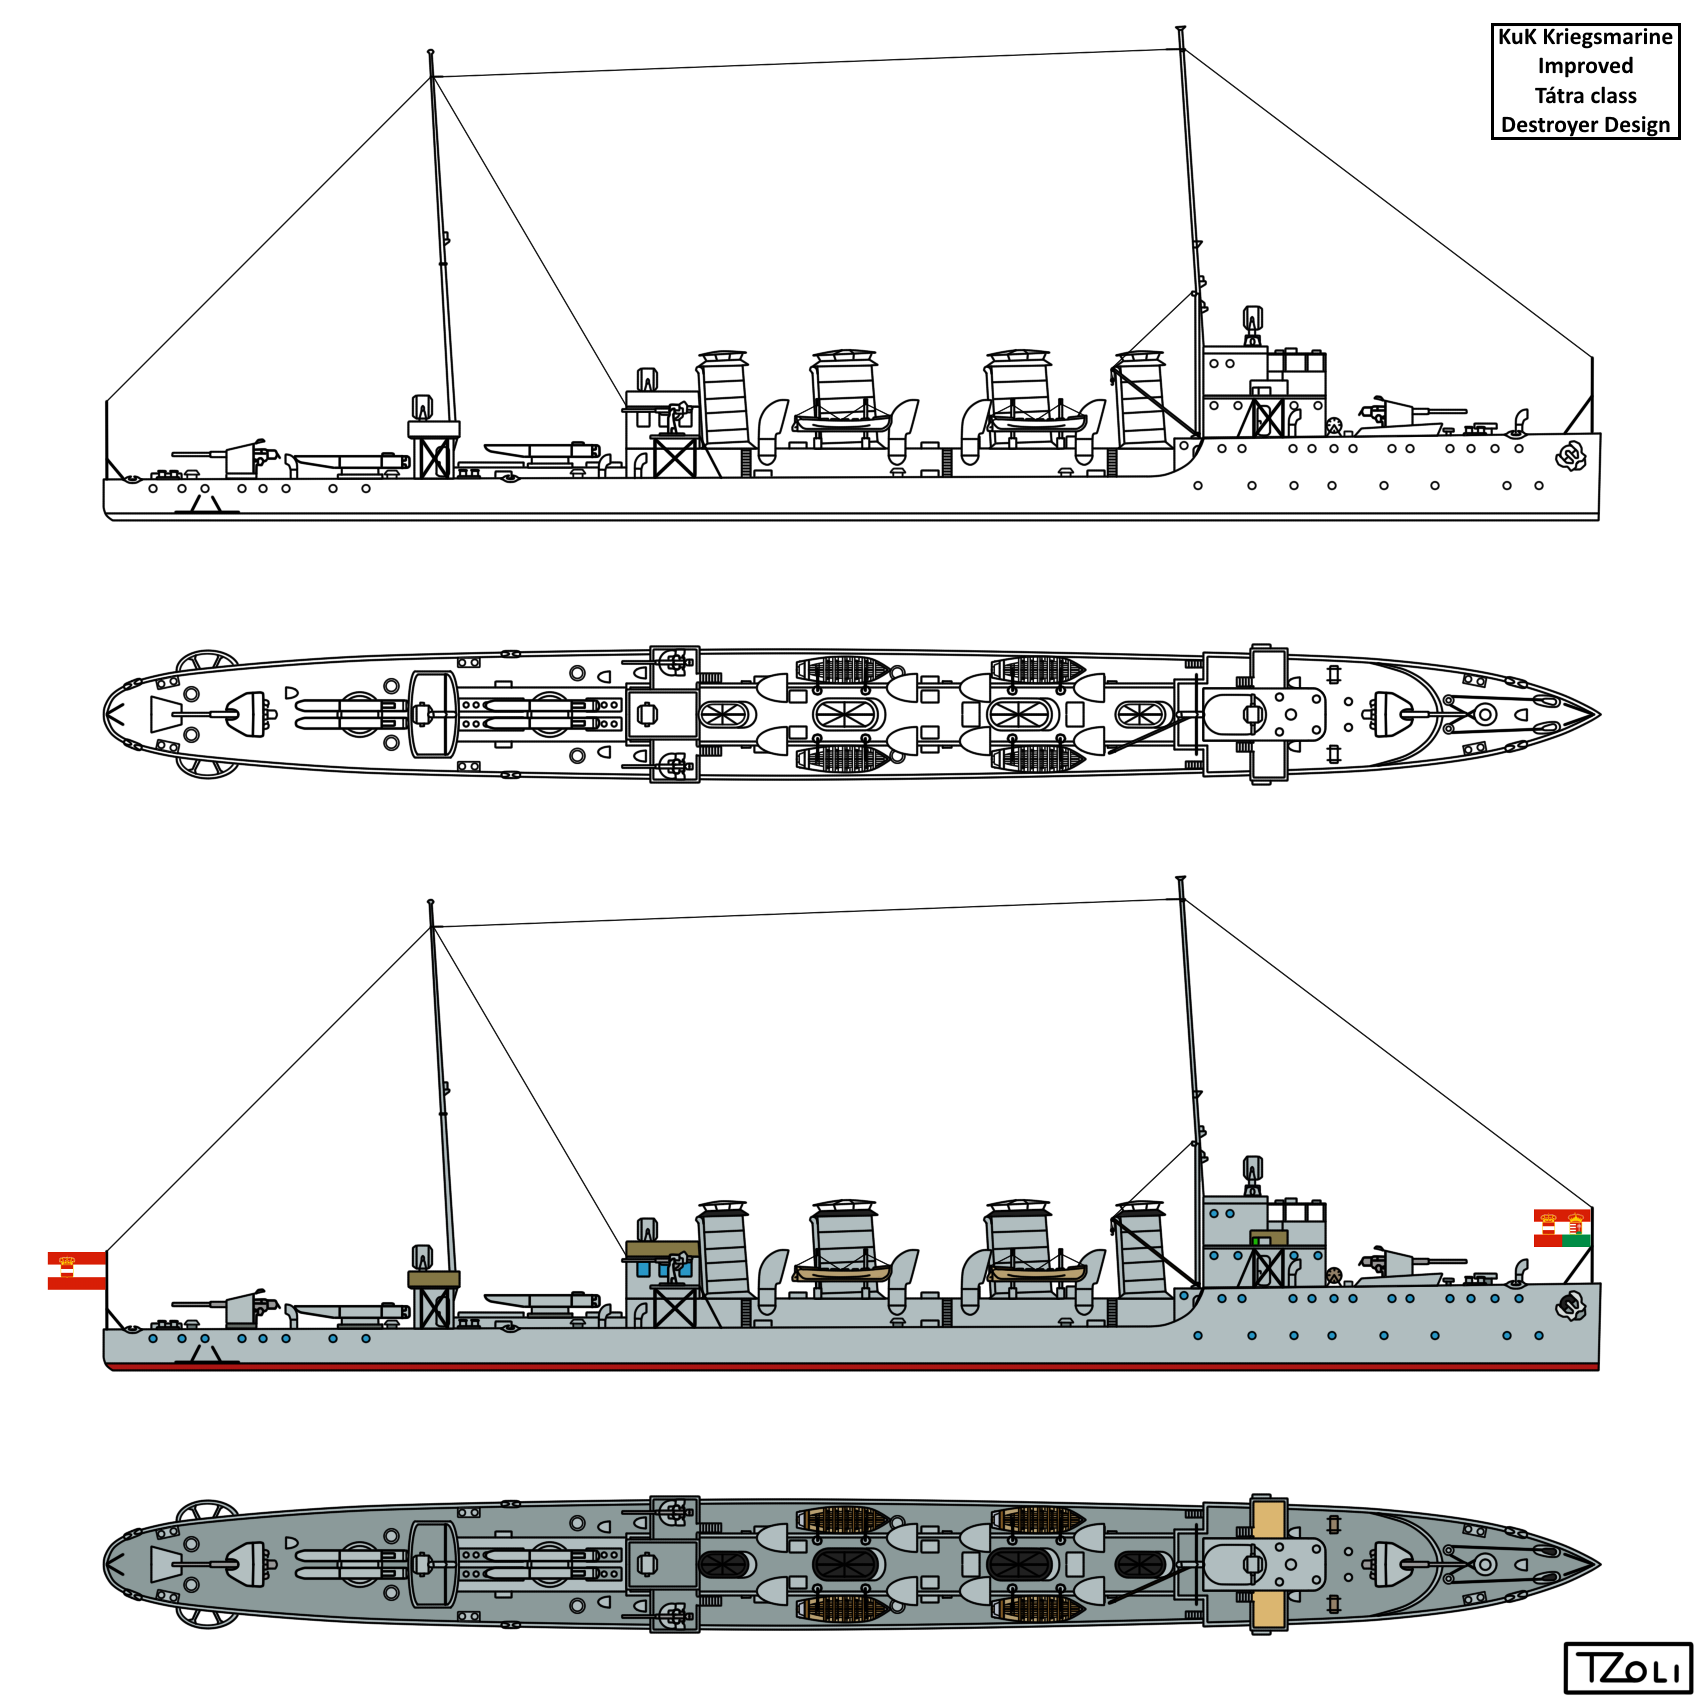 improved_tatra_class_destroyer_design_by_tzoli-db5fdj1.png